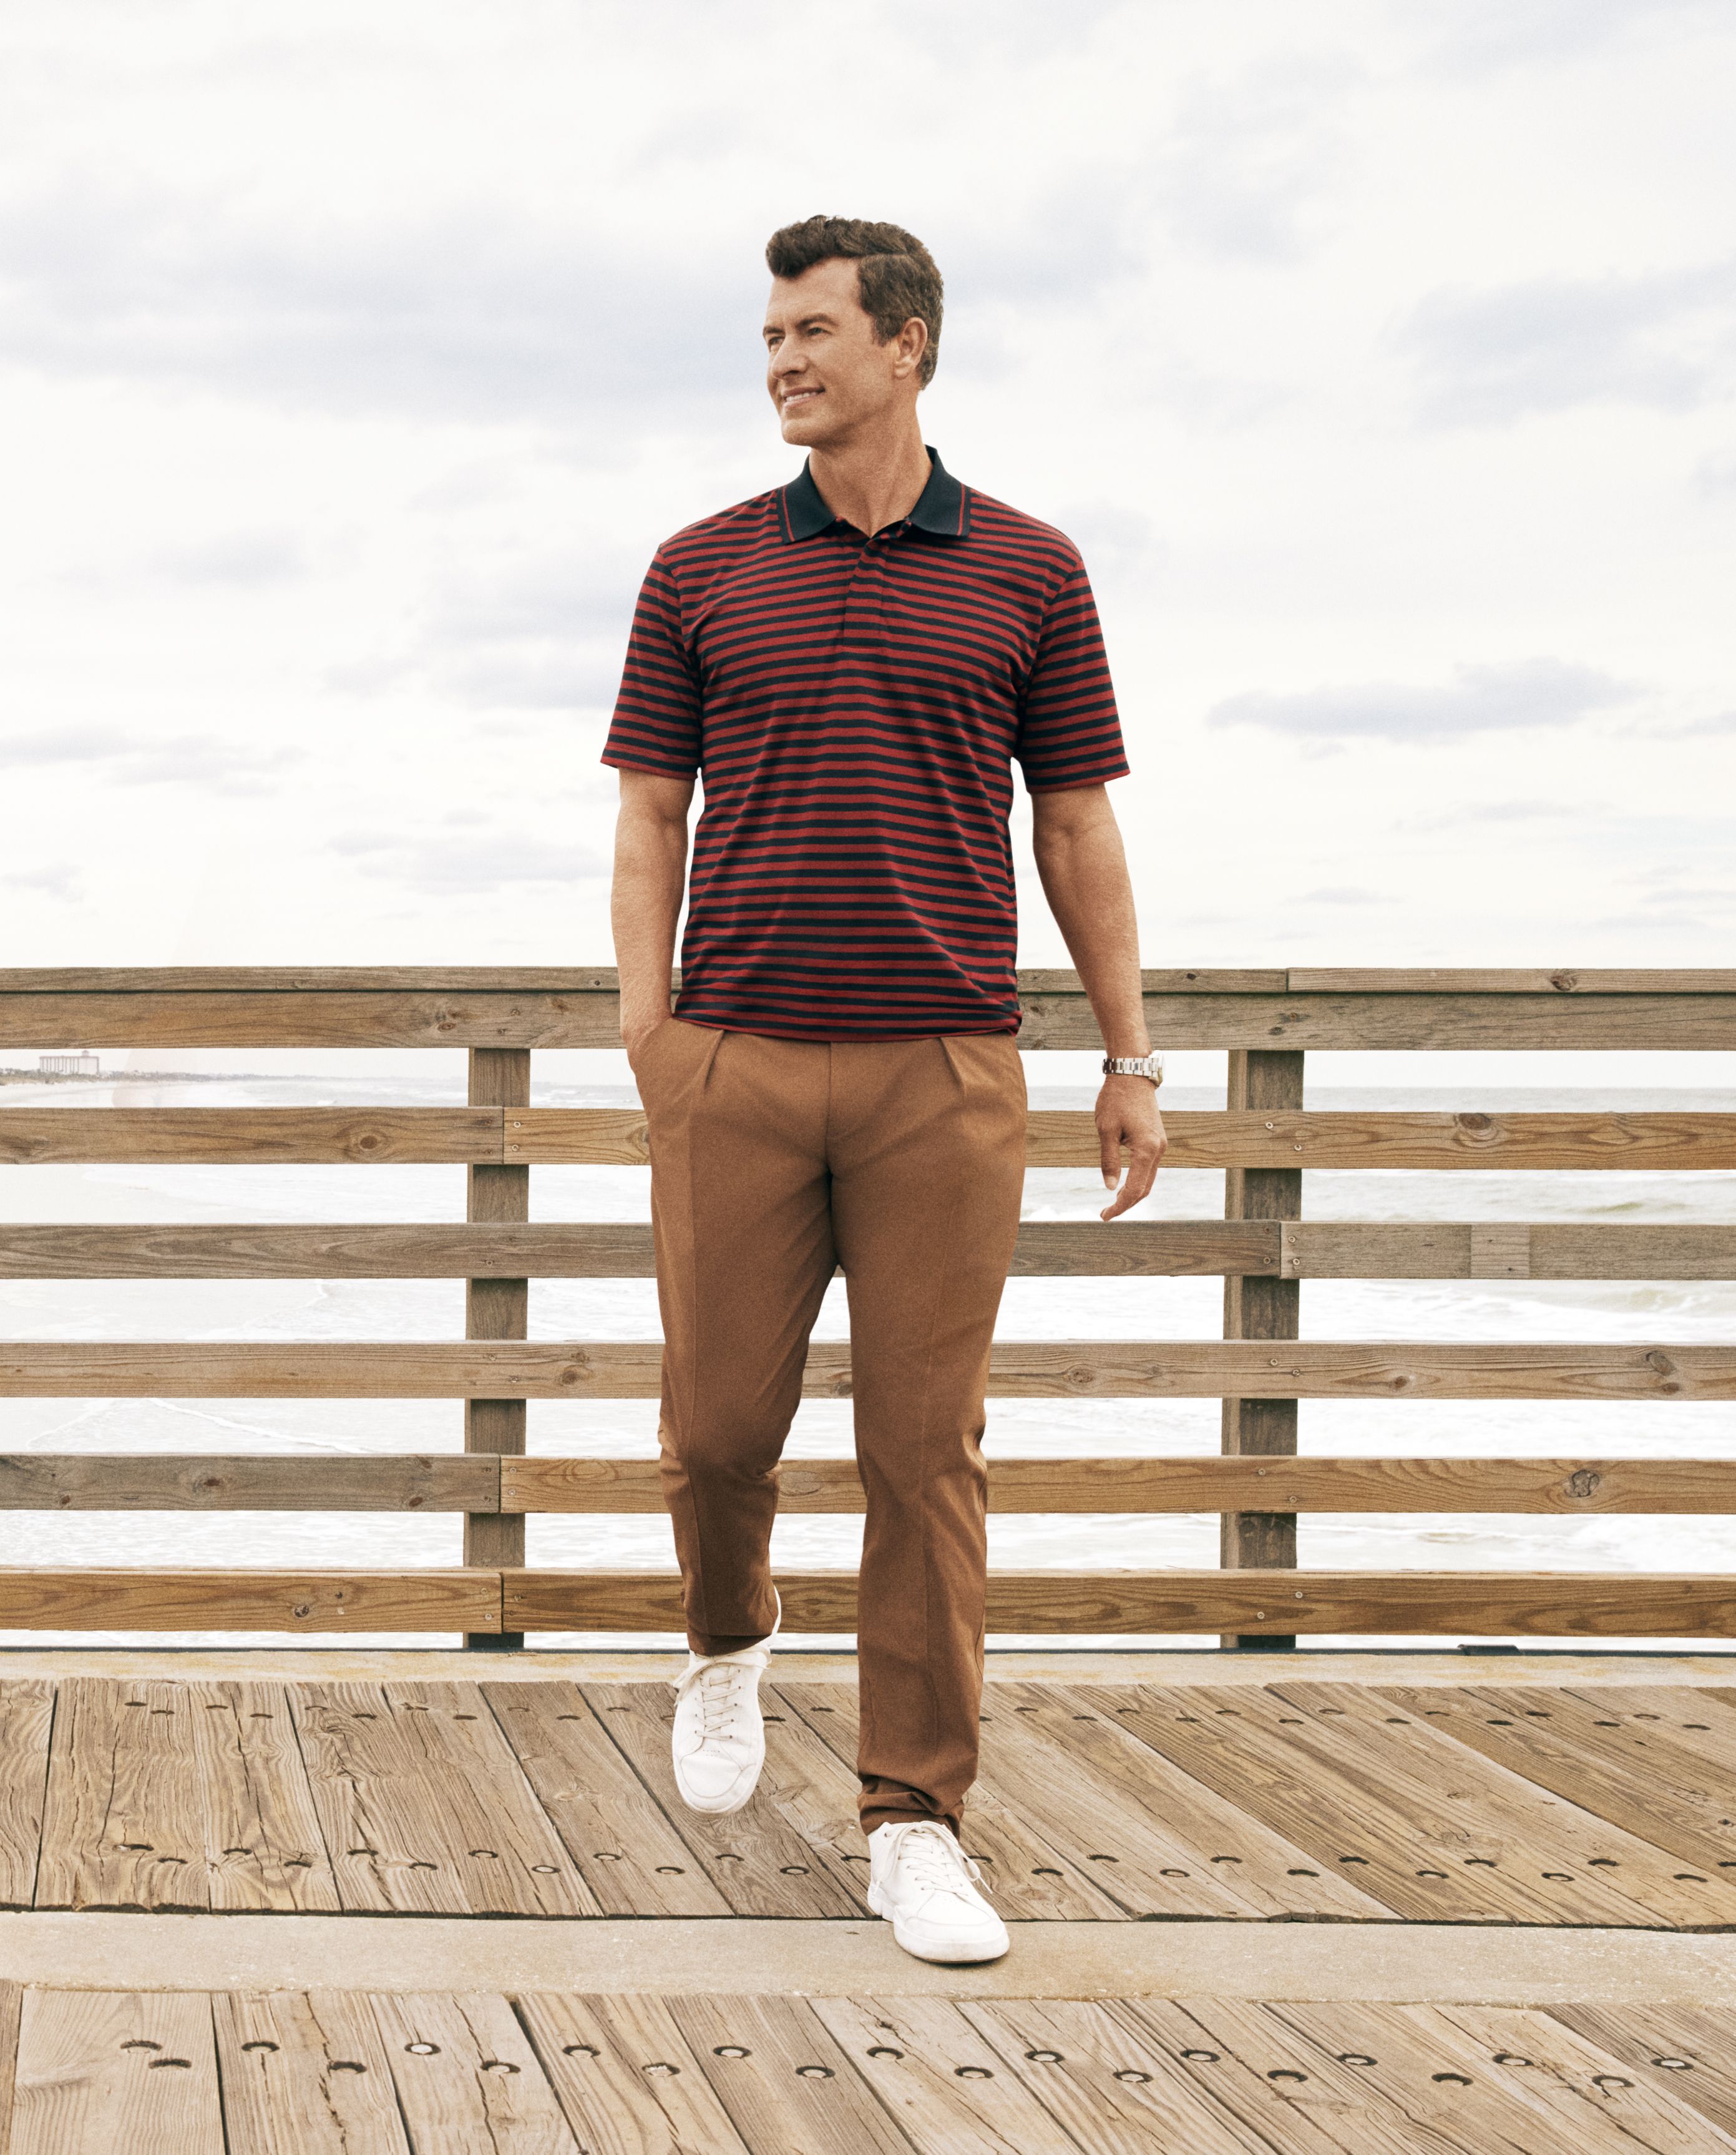 New Adam Scott Uniqlo Golf Clothing  Where to Buy Price Details